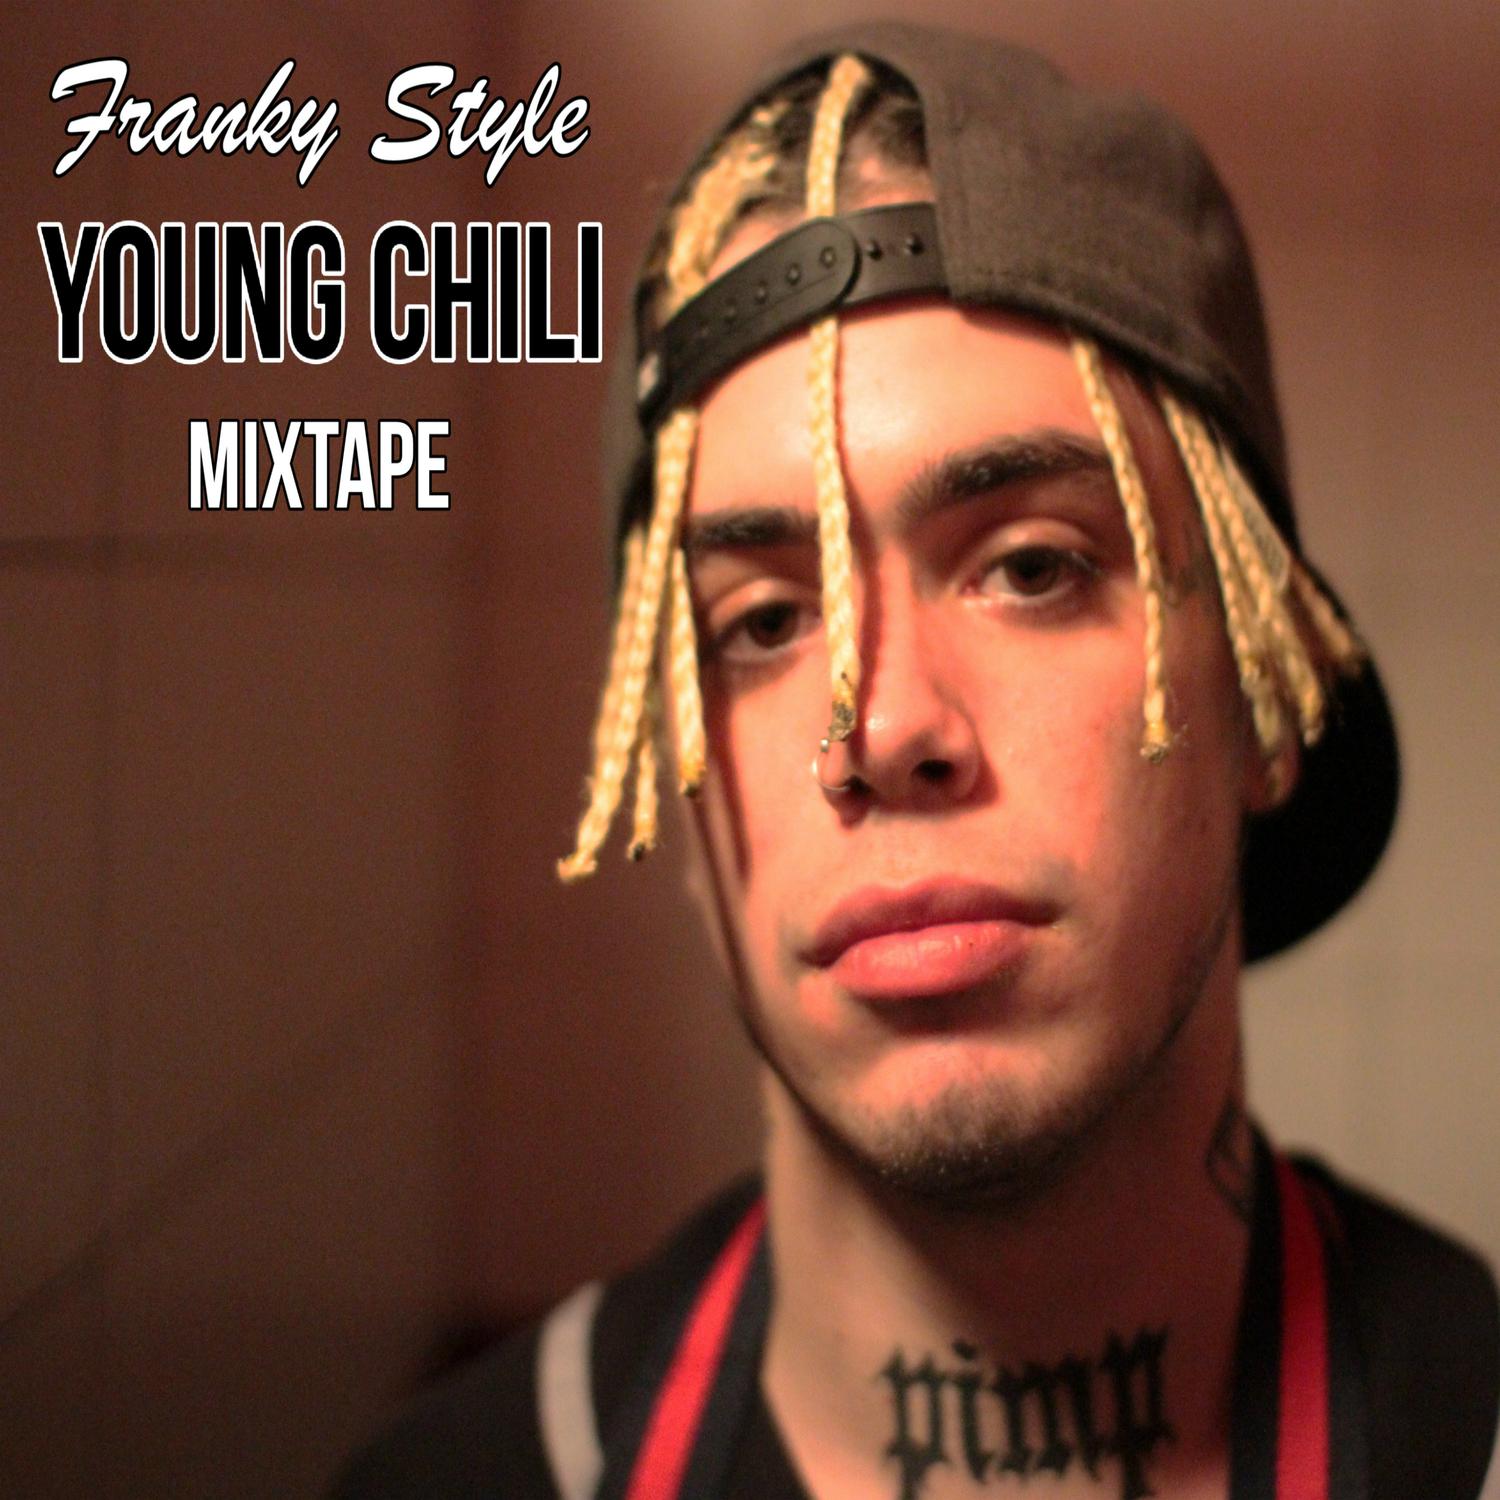 Young Chili (Mixtape)